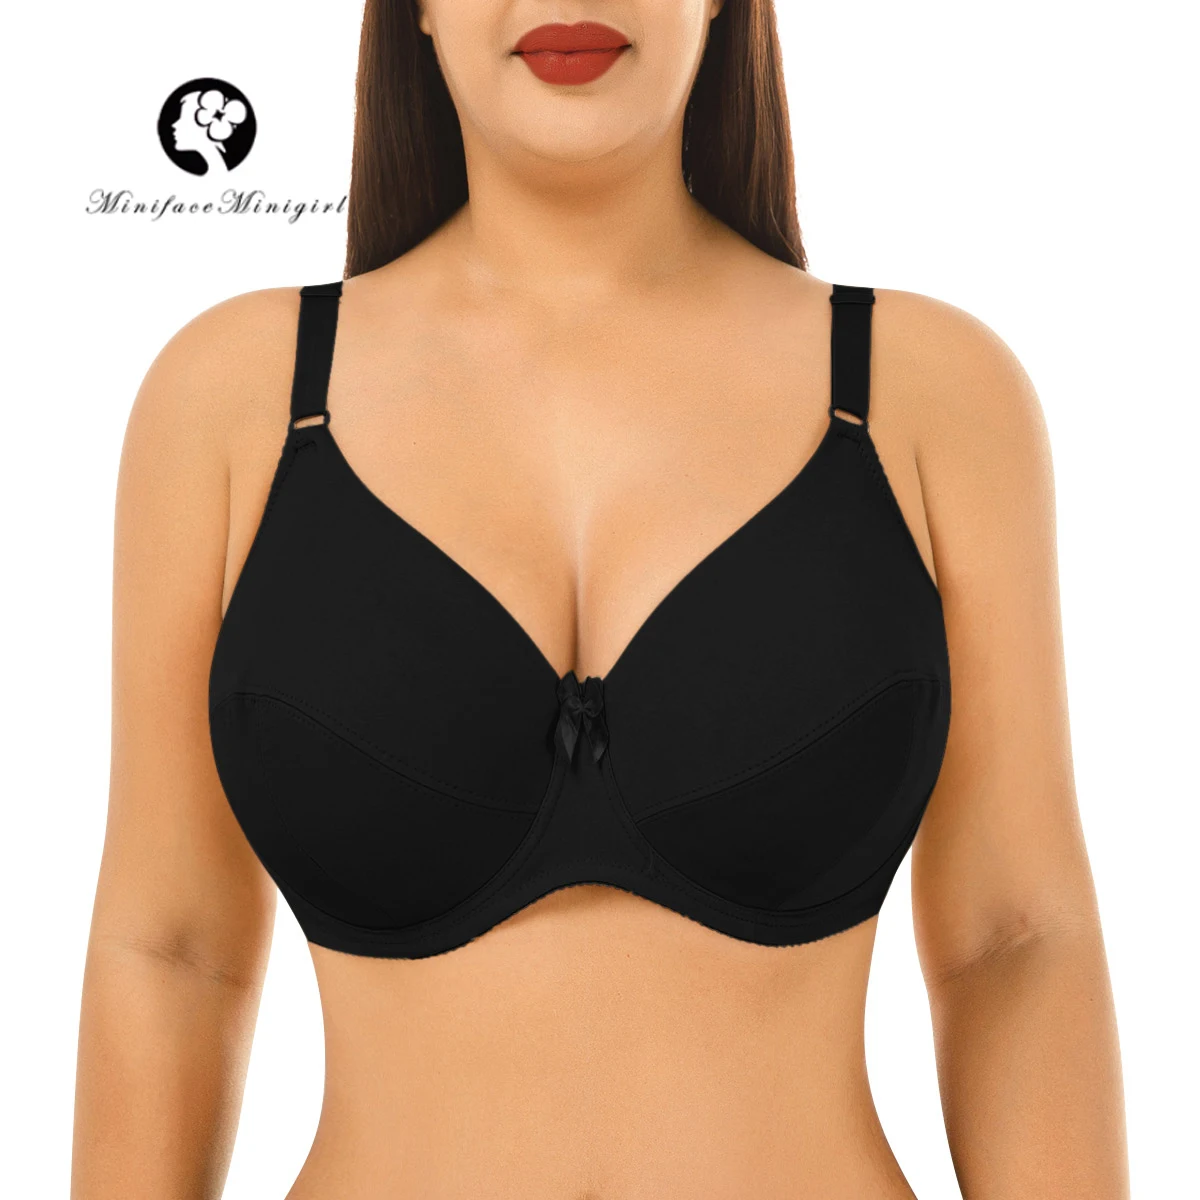 

Women’s Plus Size Bra Seamless Push Up Full Figure Contour Underwear Lingerie BH Push Up Bralette Large Big Breast Brassiere